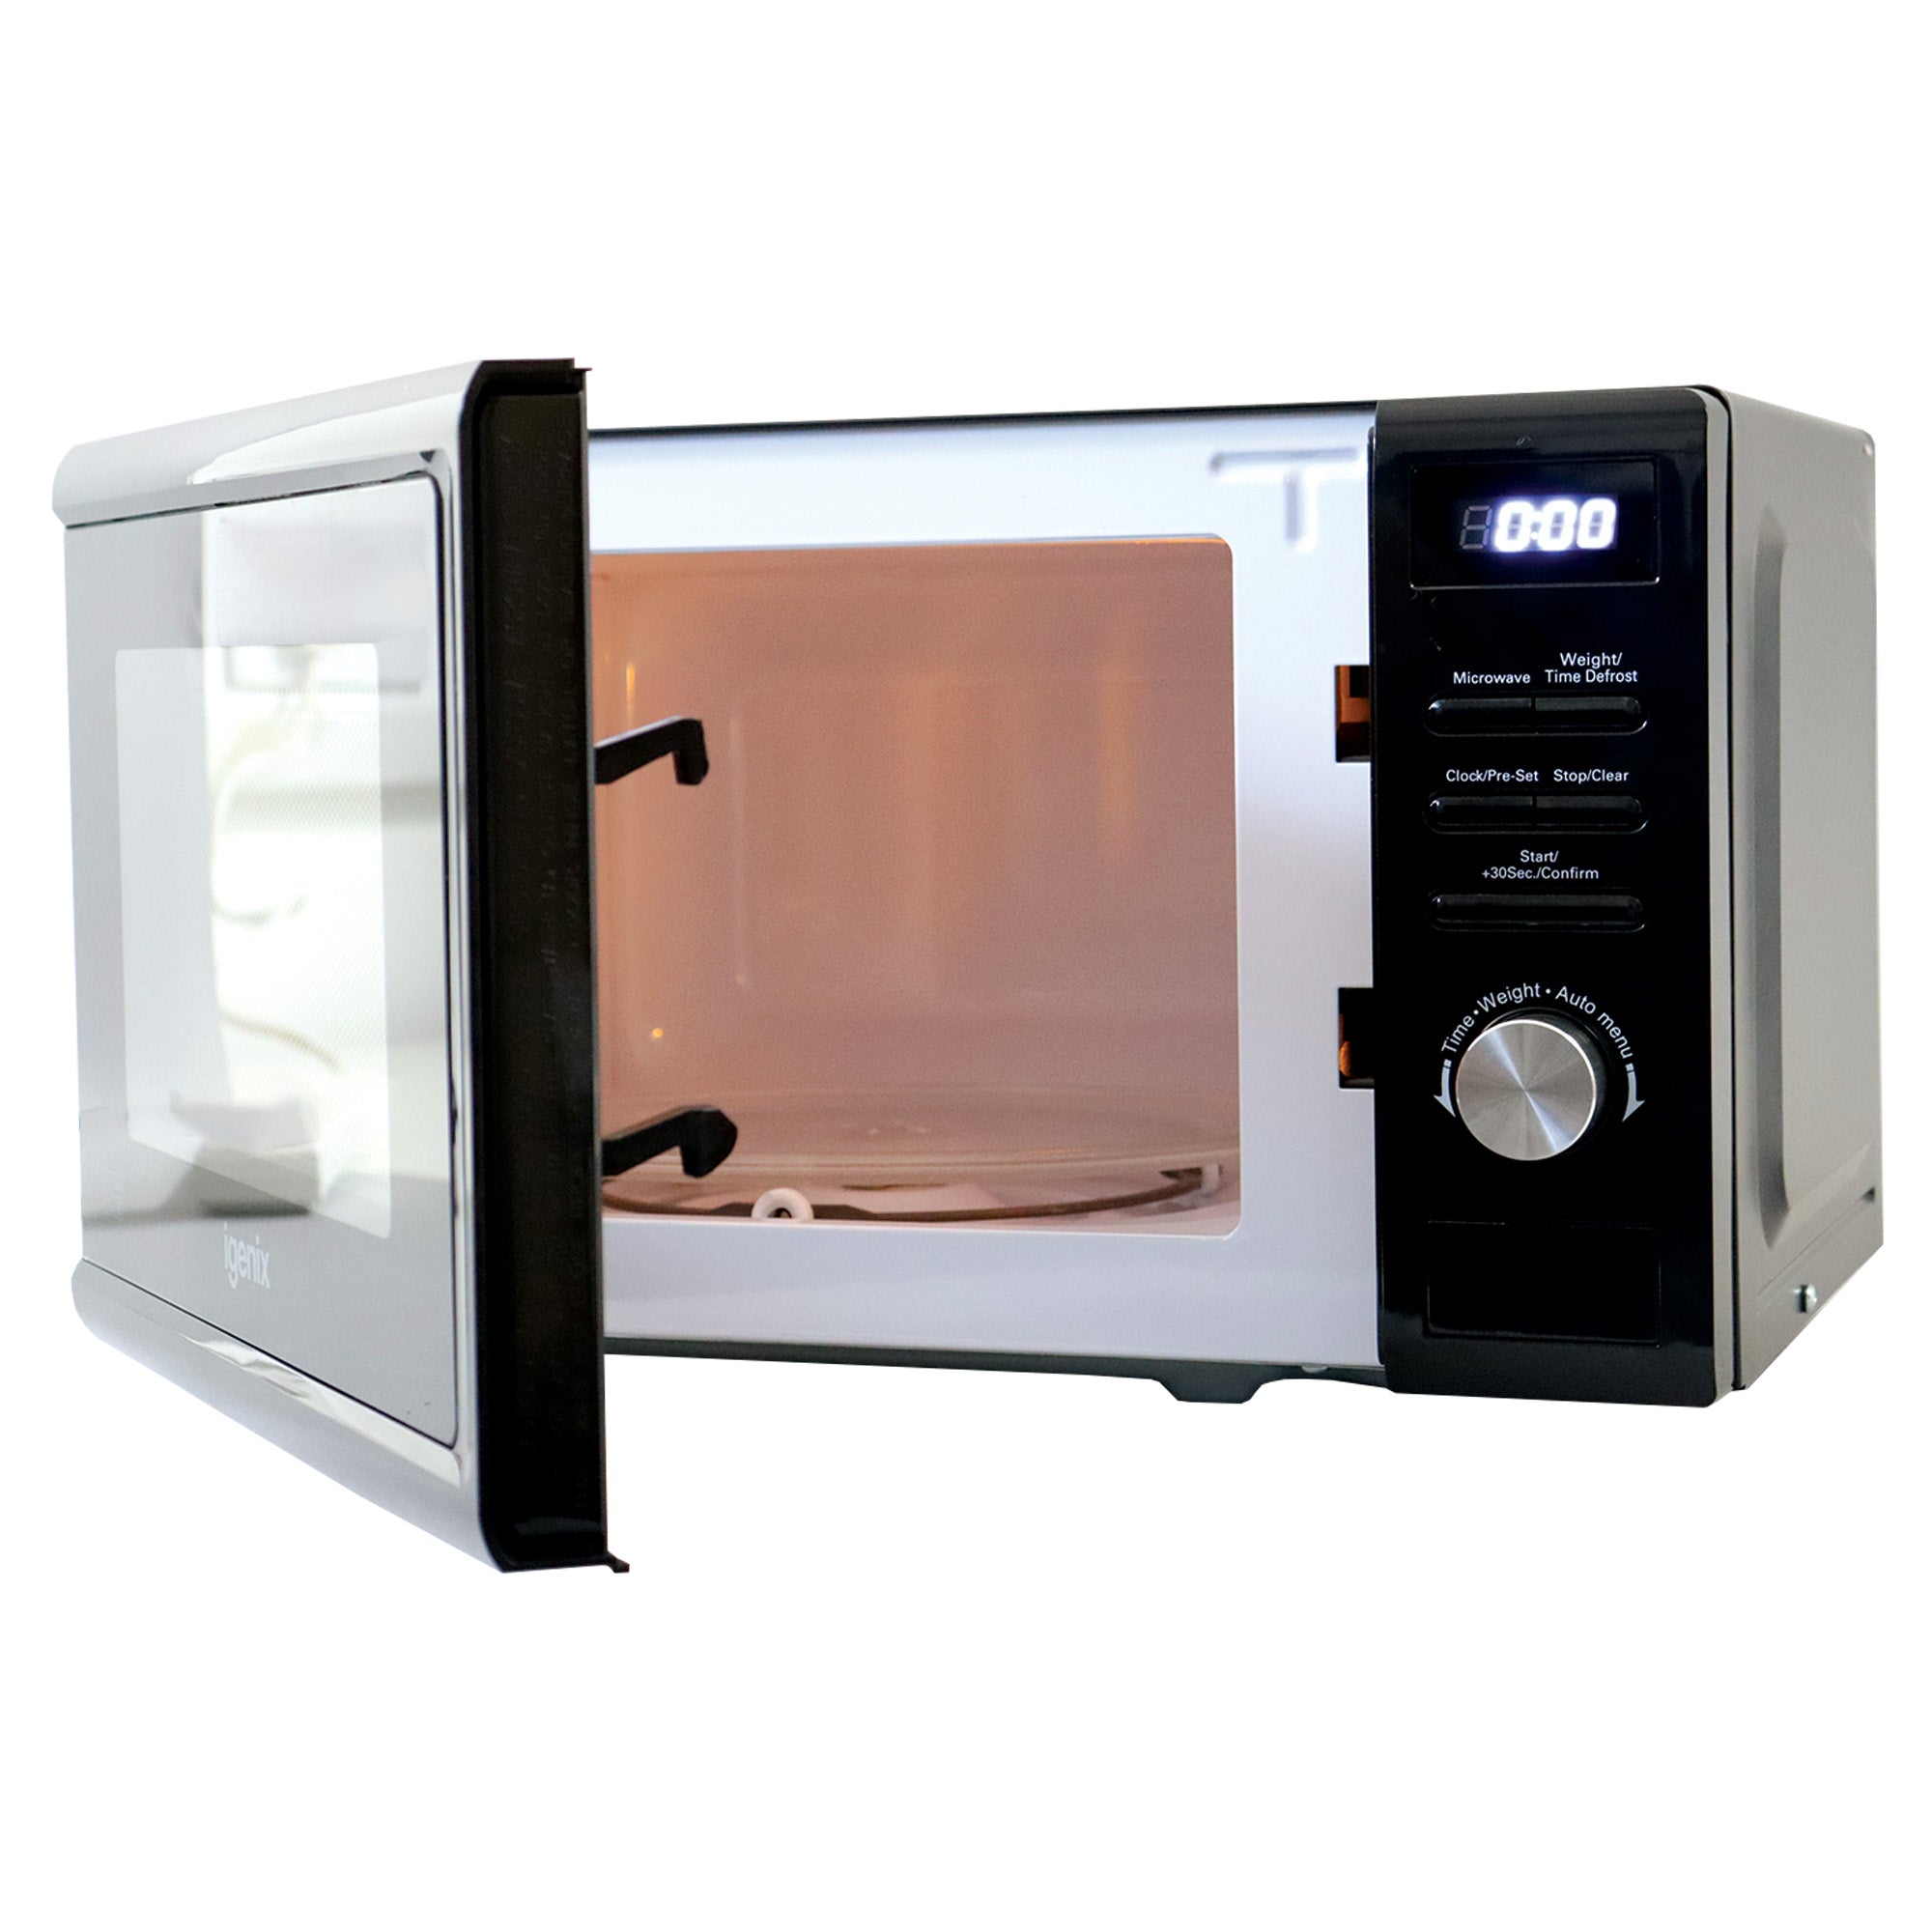 Digital Microwave, 20 Litre, 5 Power Settings, 800W, Black